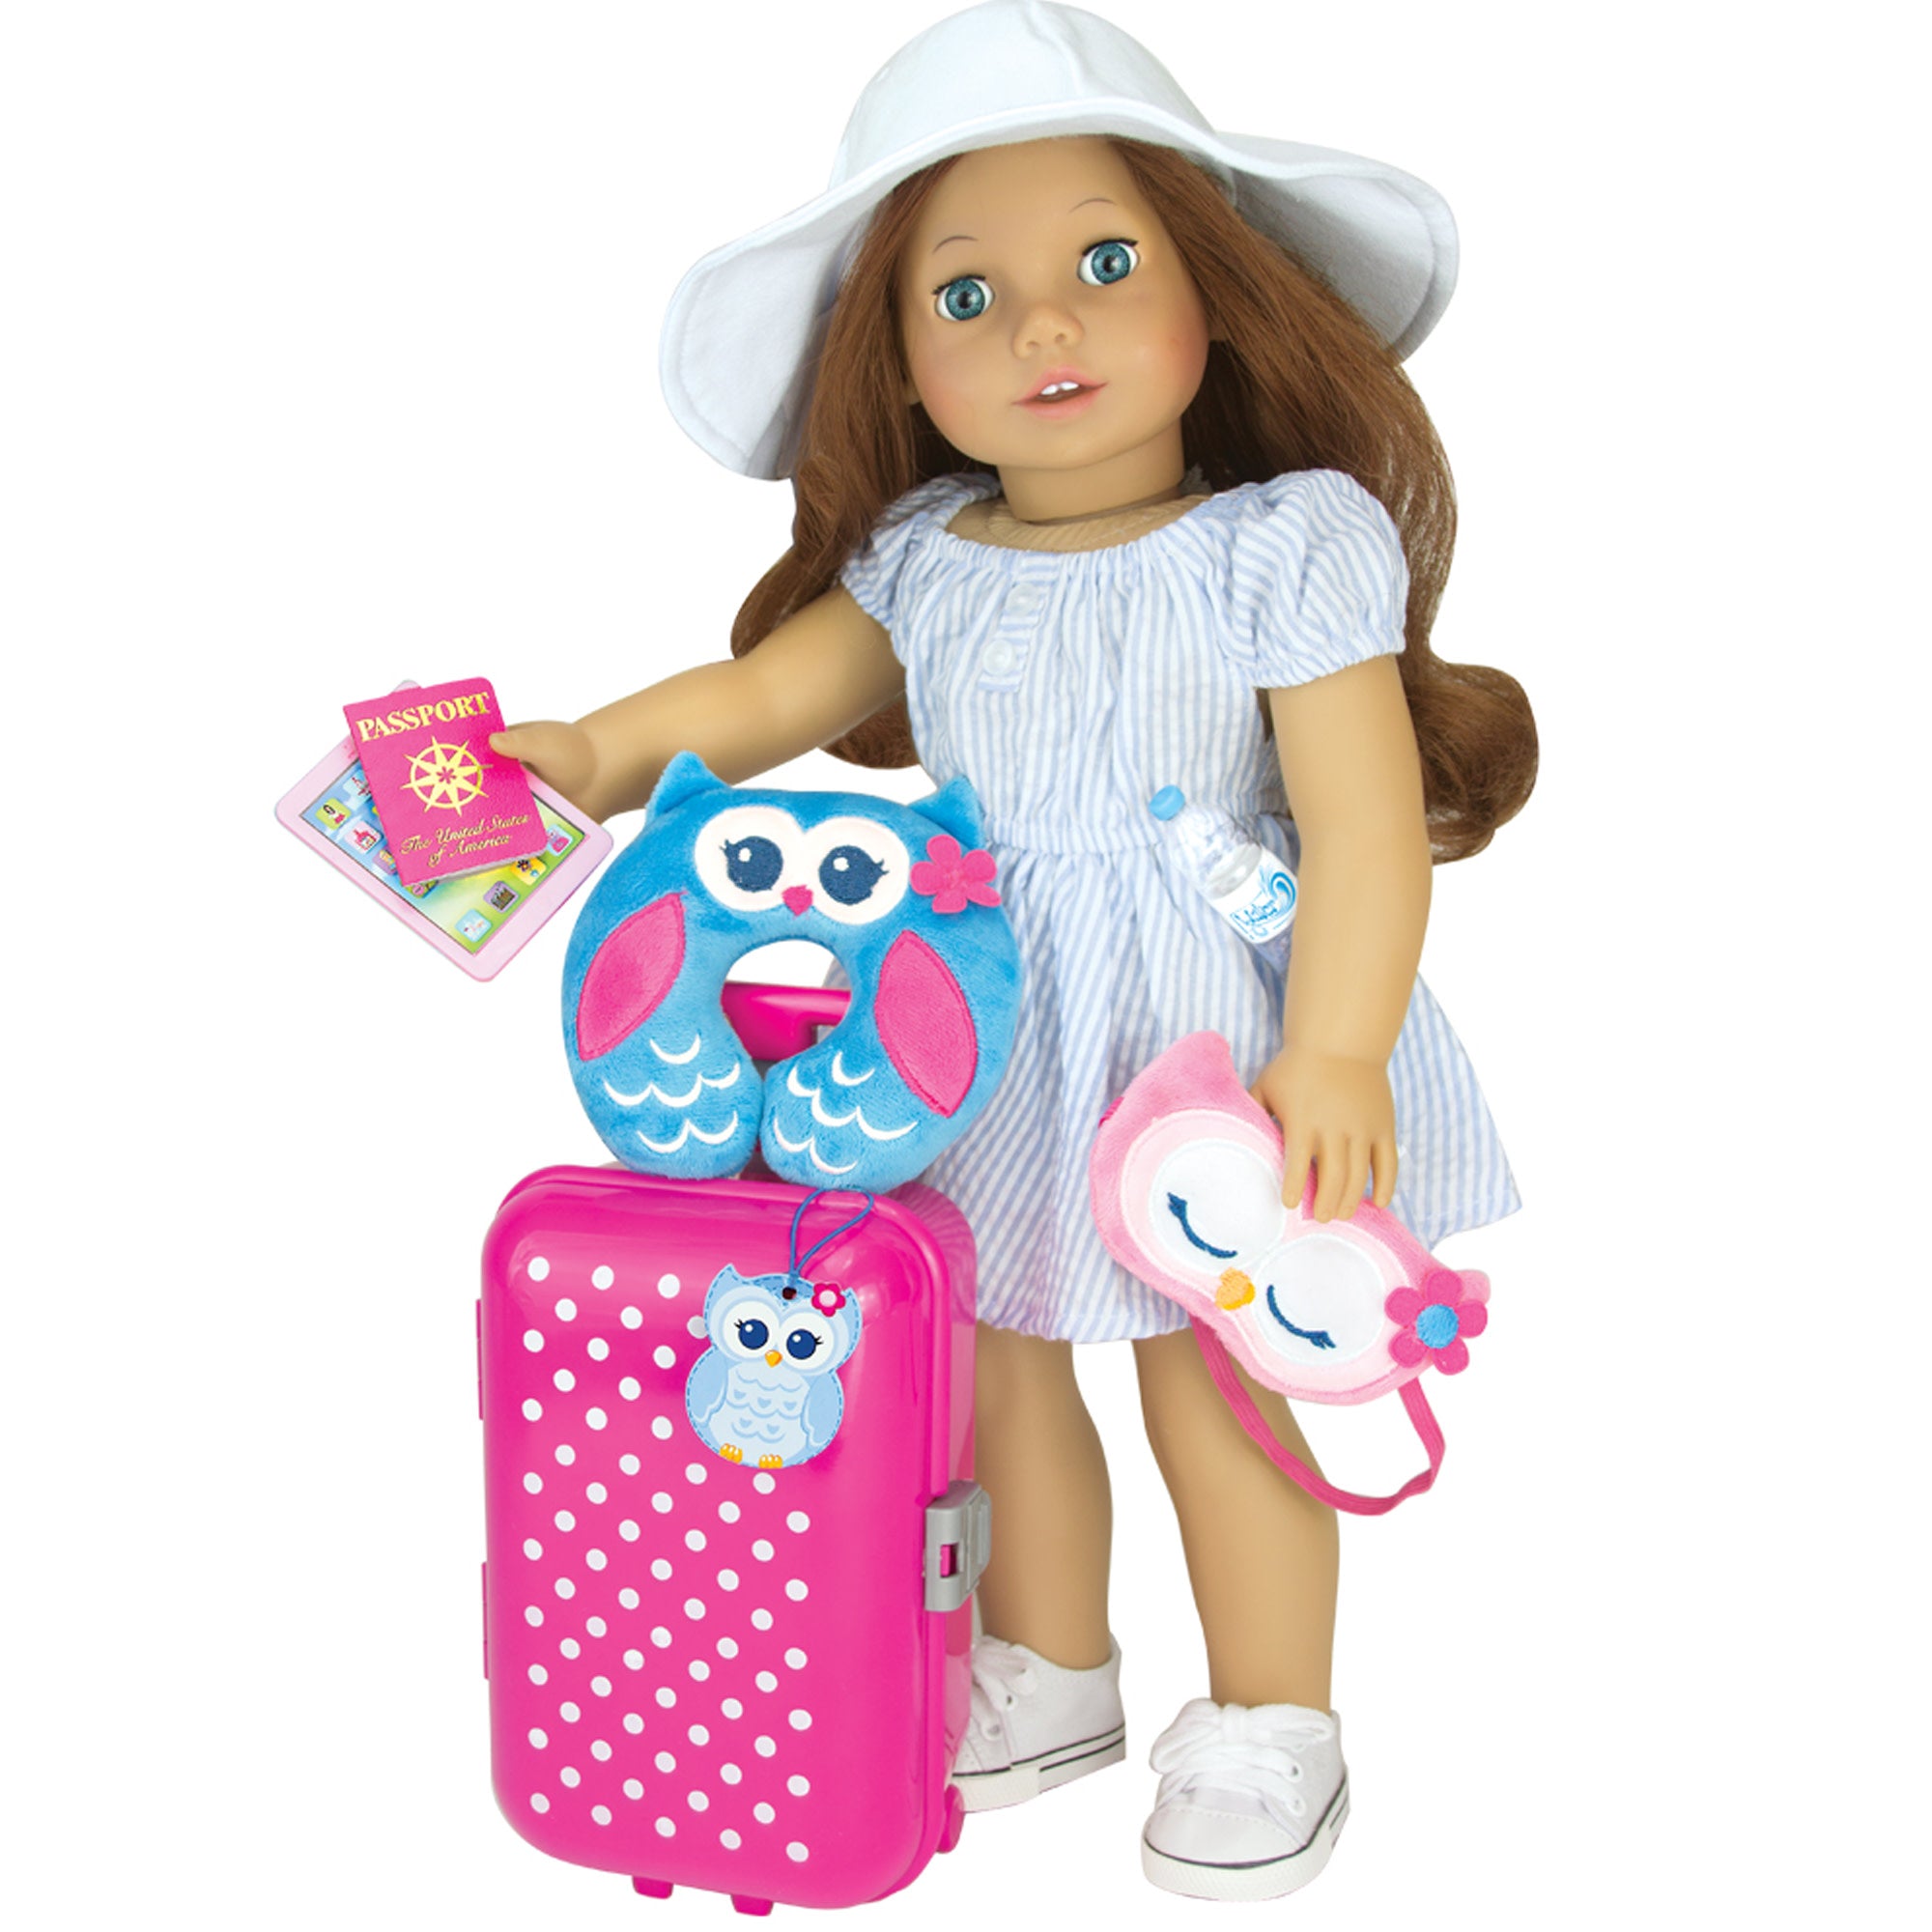 Sophia’s Travel Accessories Plus Suitcase Set for 18" Dolls